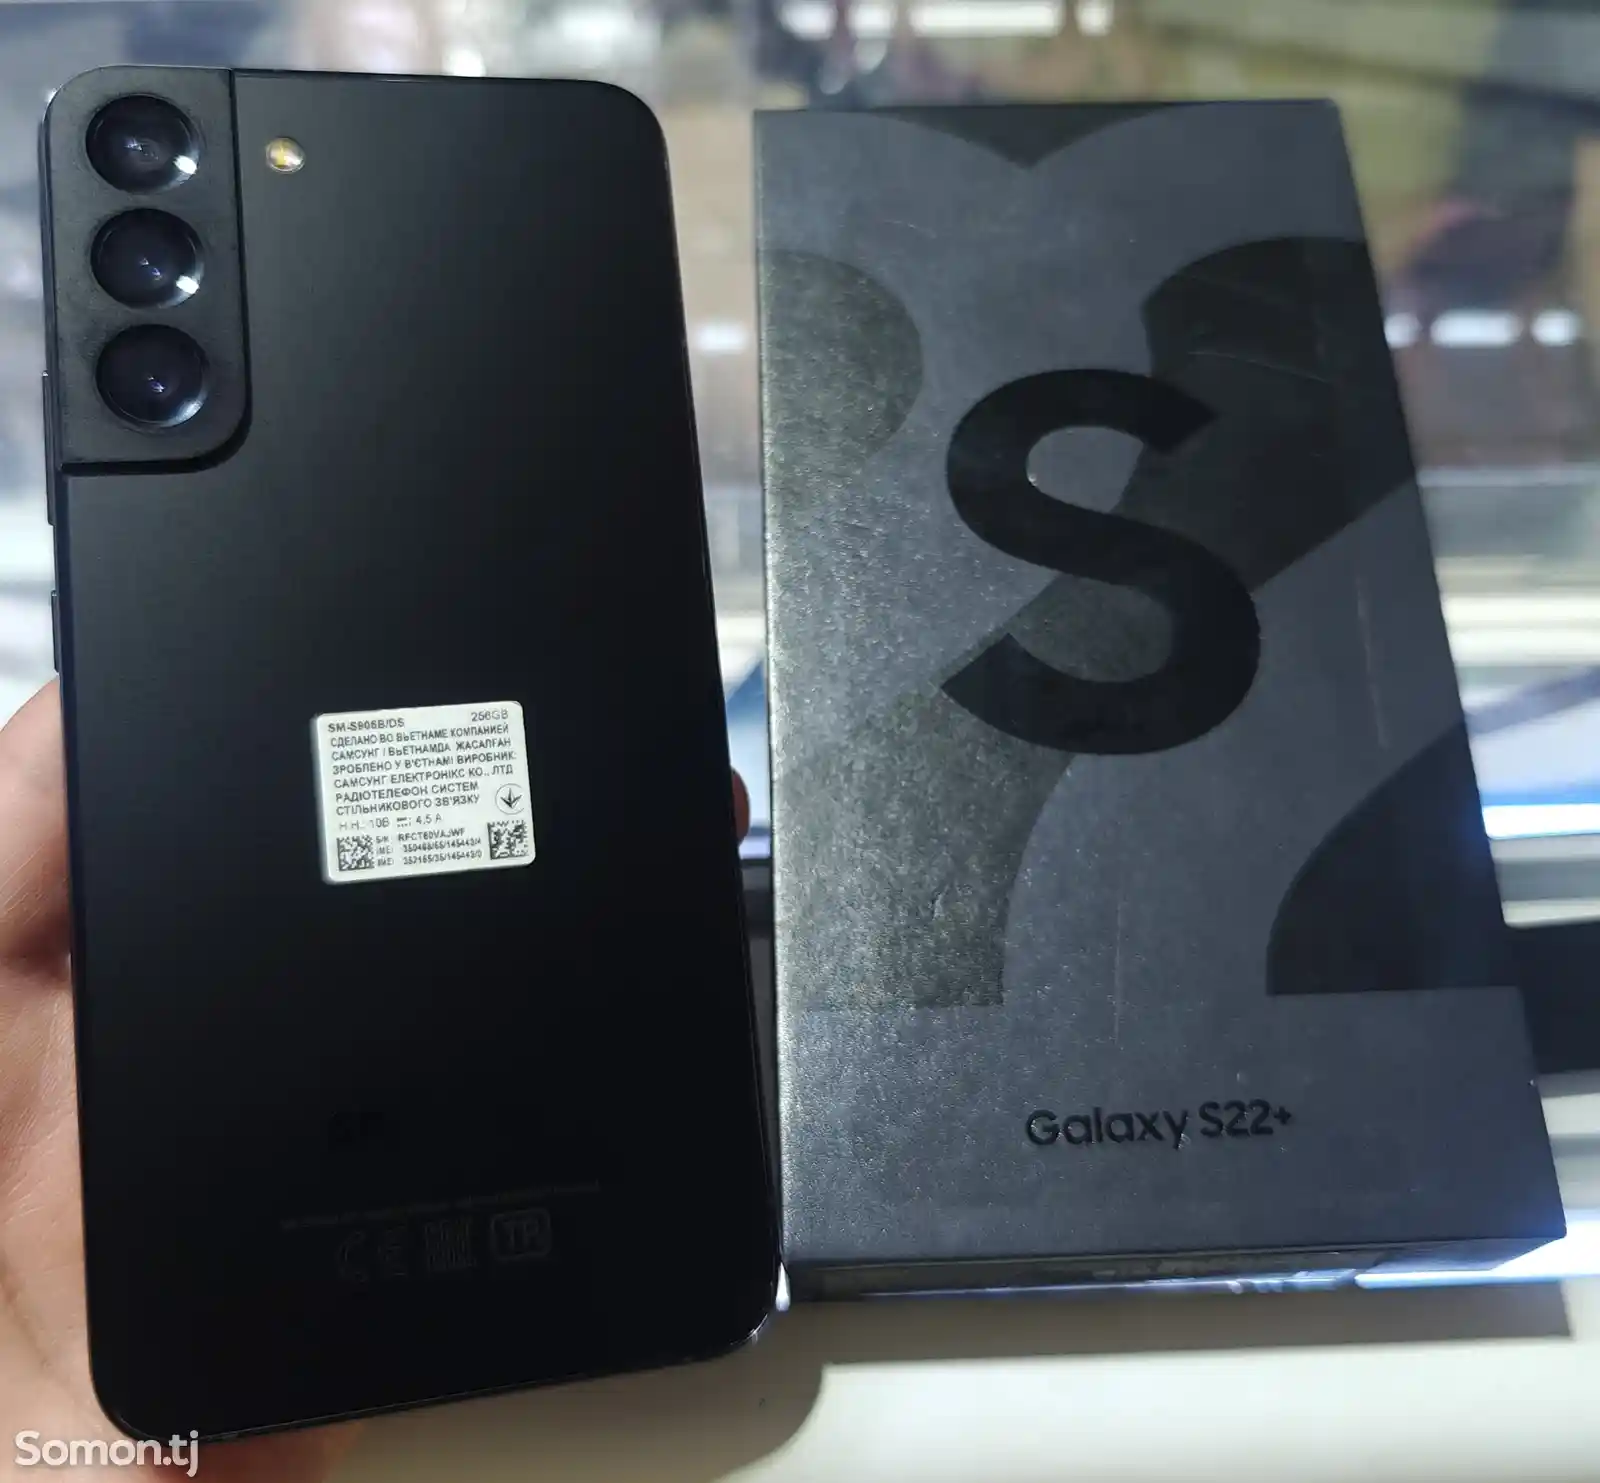 Samsung Galaxy S22 plus Black duos 256Gb-2